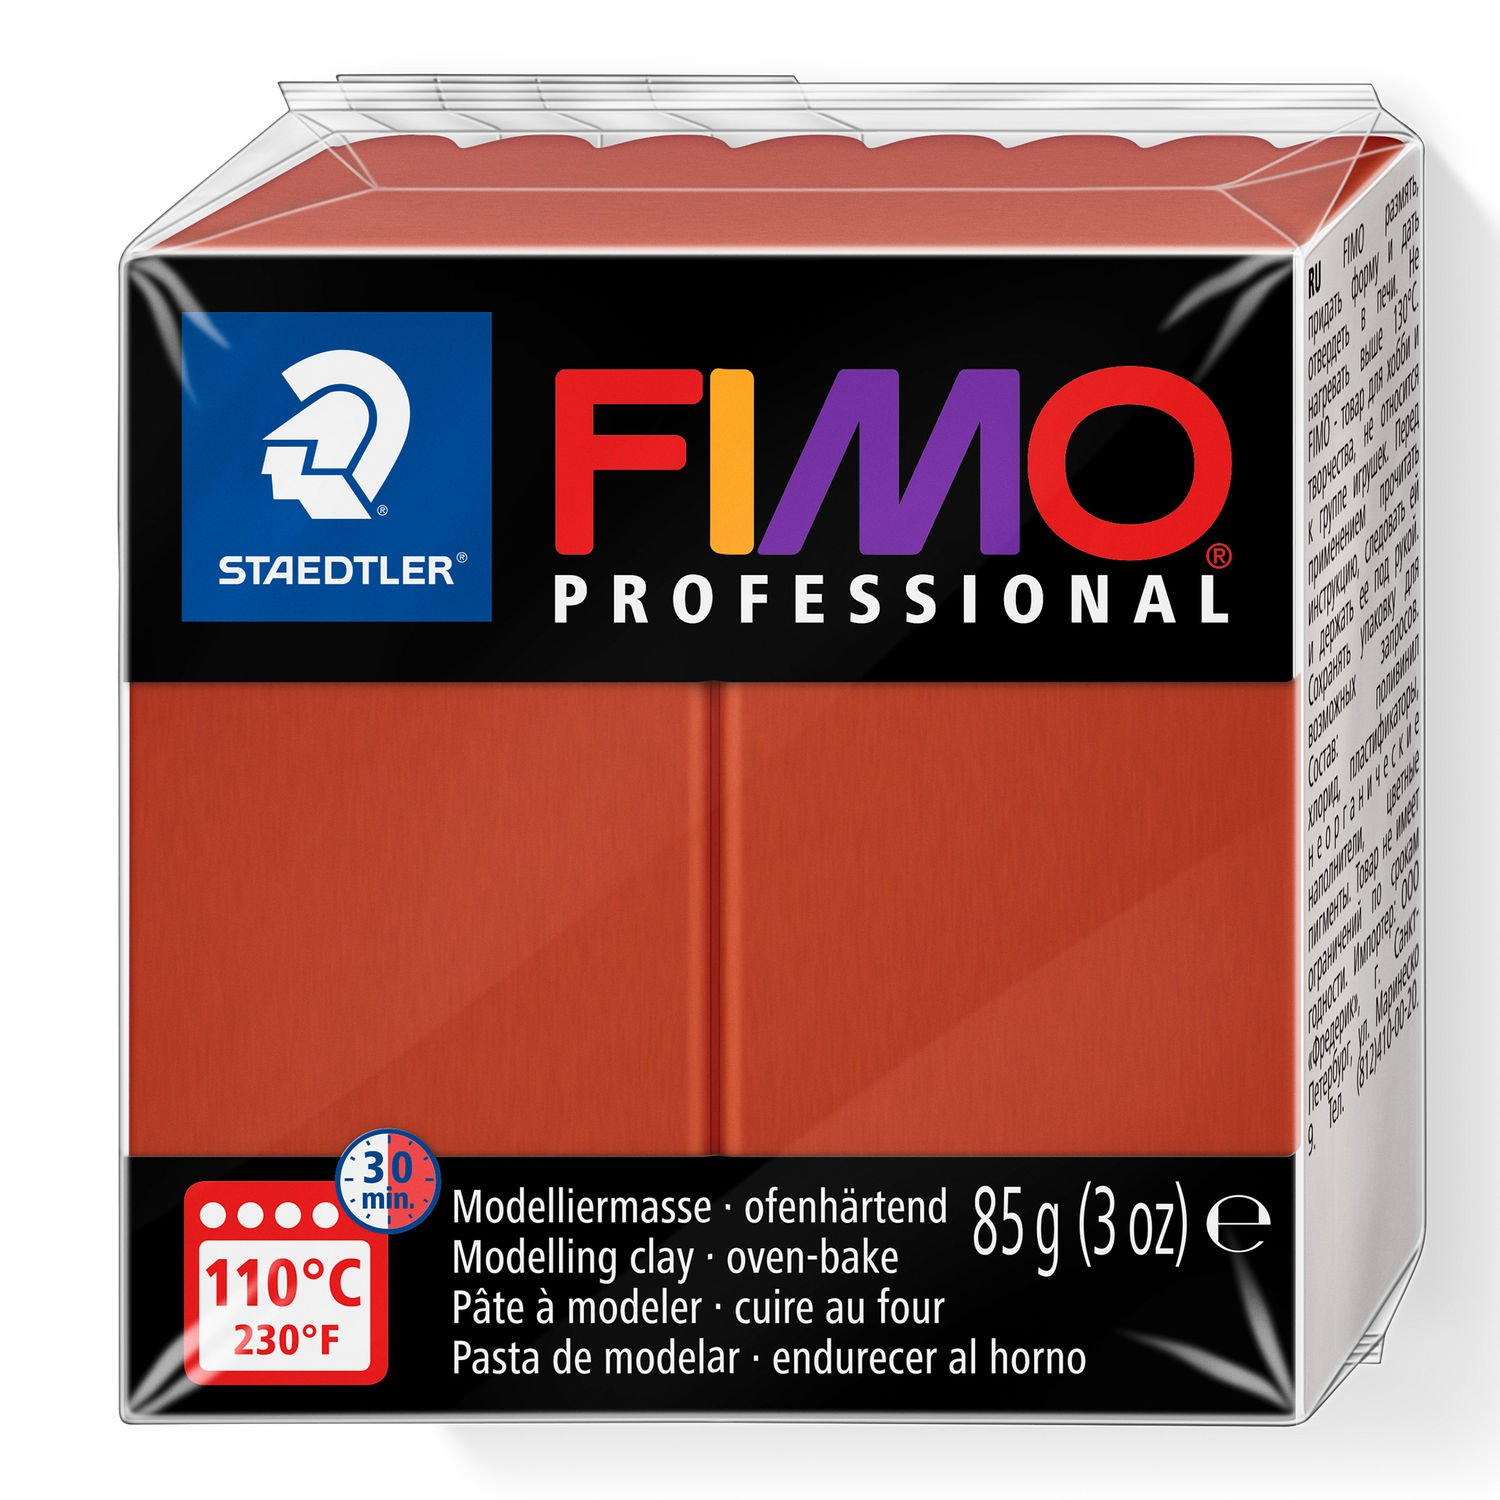 STAEDTLER FIMO 8004 - Modellierton - Terrakotta - Erwachsener - 1 Stück(e) - 1 Farben - 110 °C